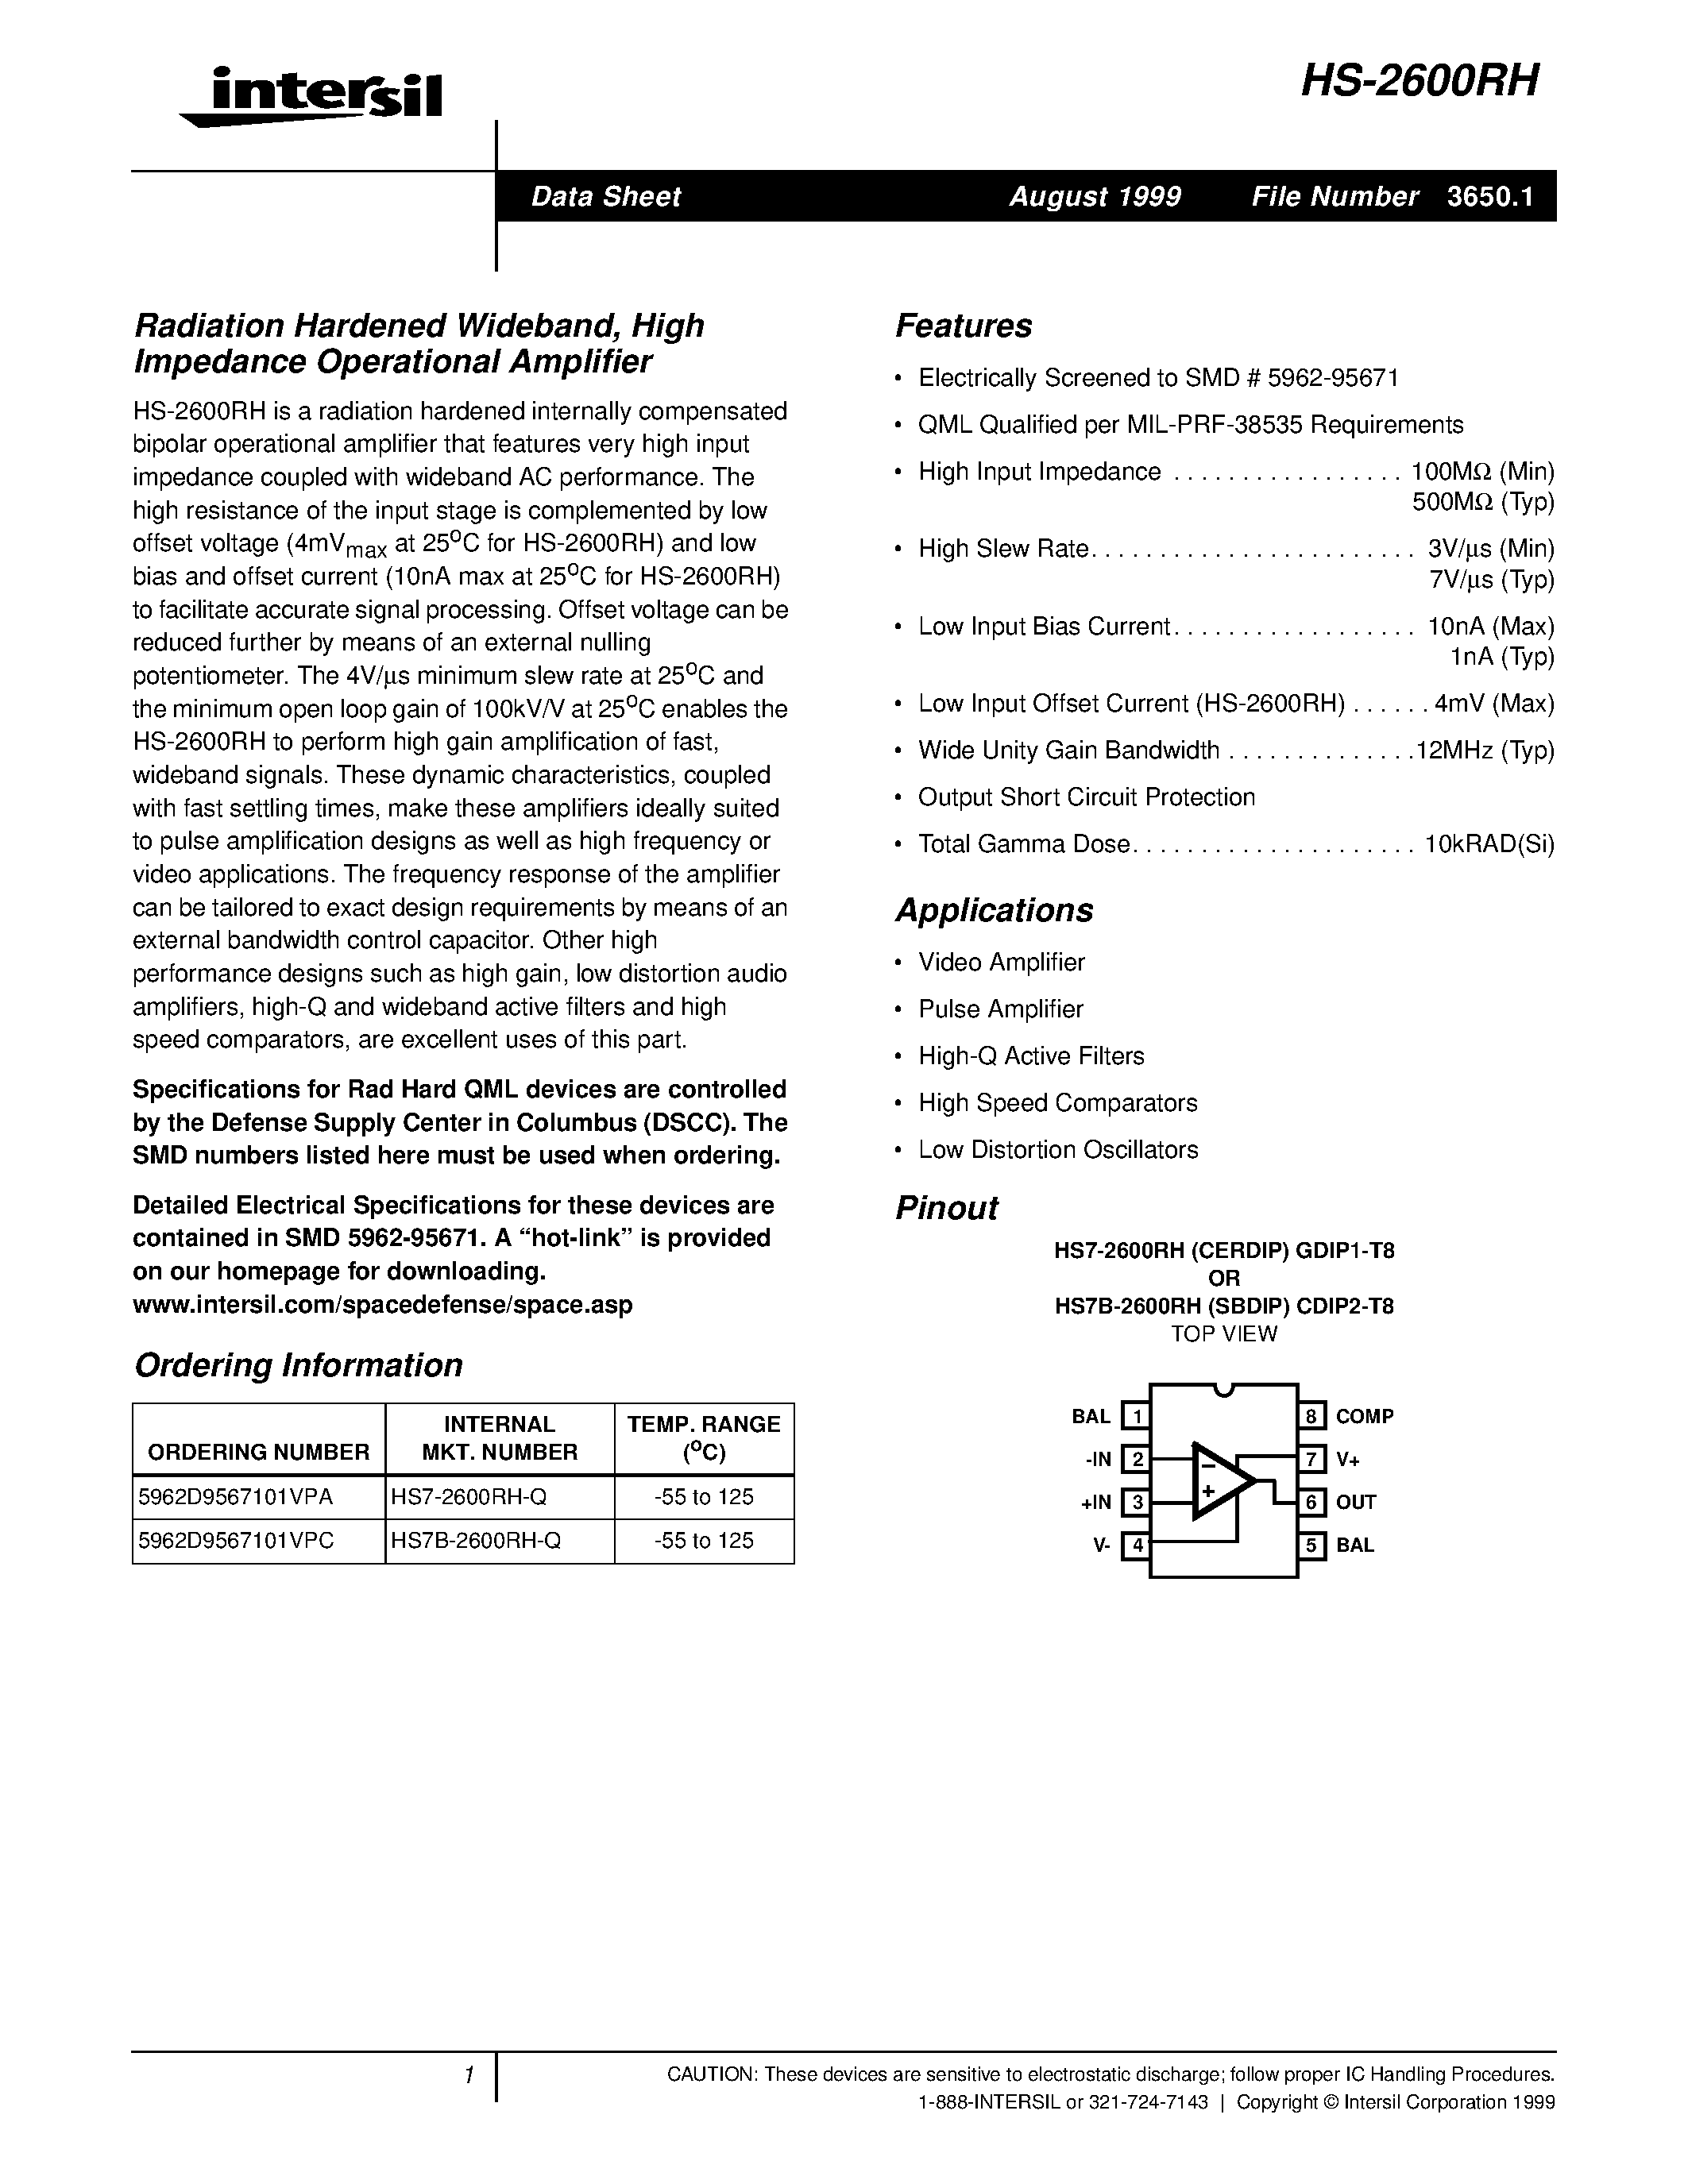 Даташит HS7-2600RH-Q - Radiation Hardened Wideband/ High Impedance Operational Amplifier страница 1